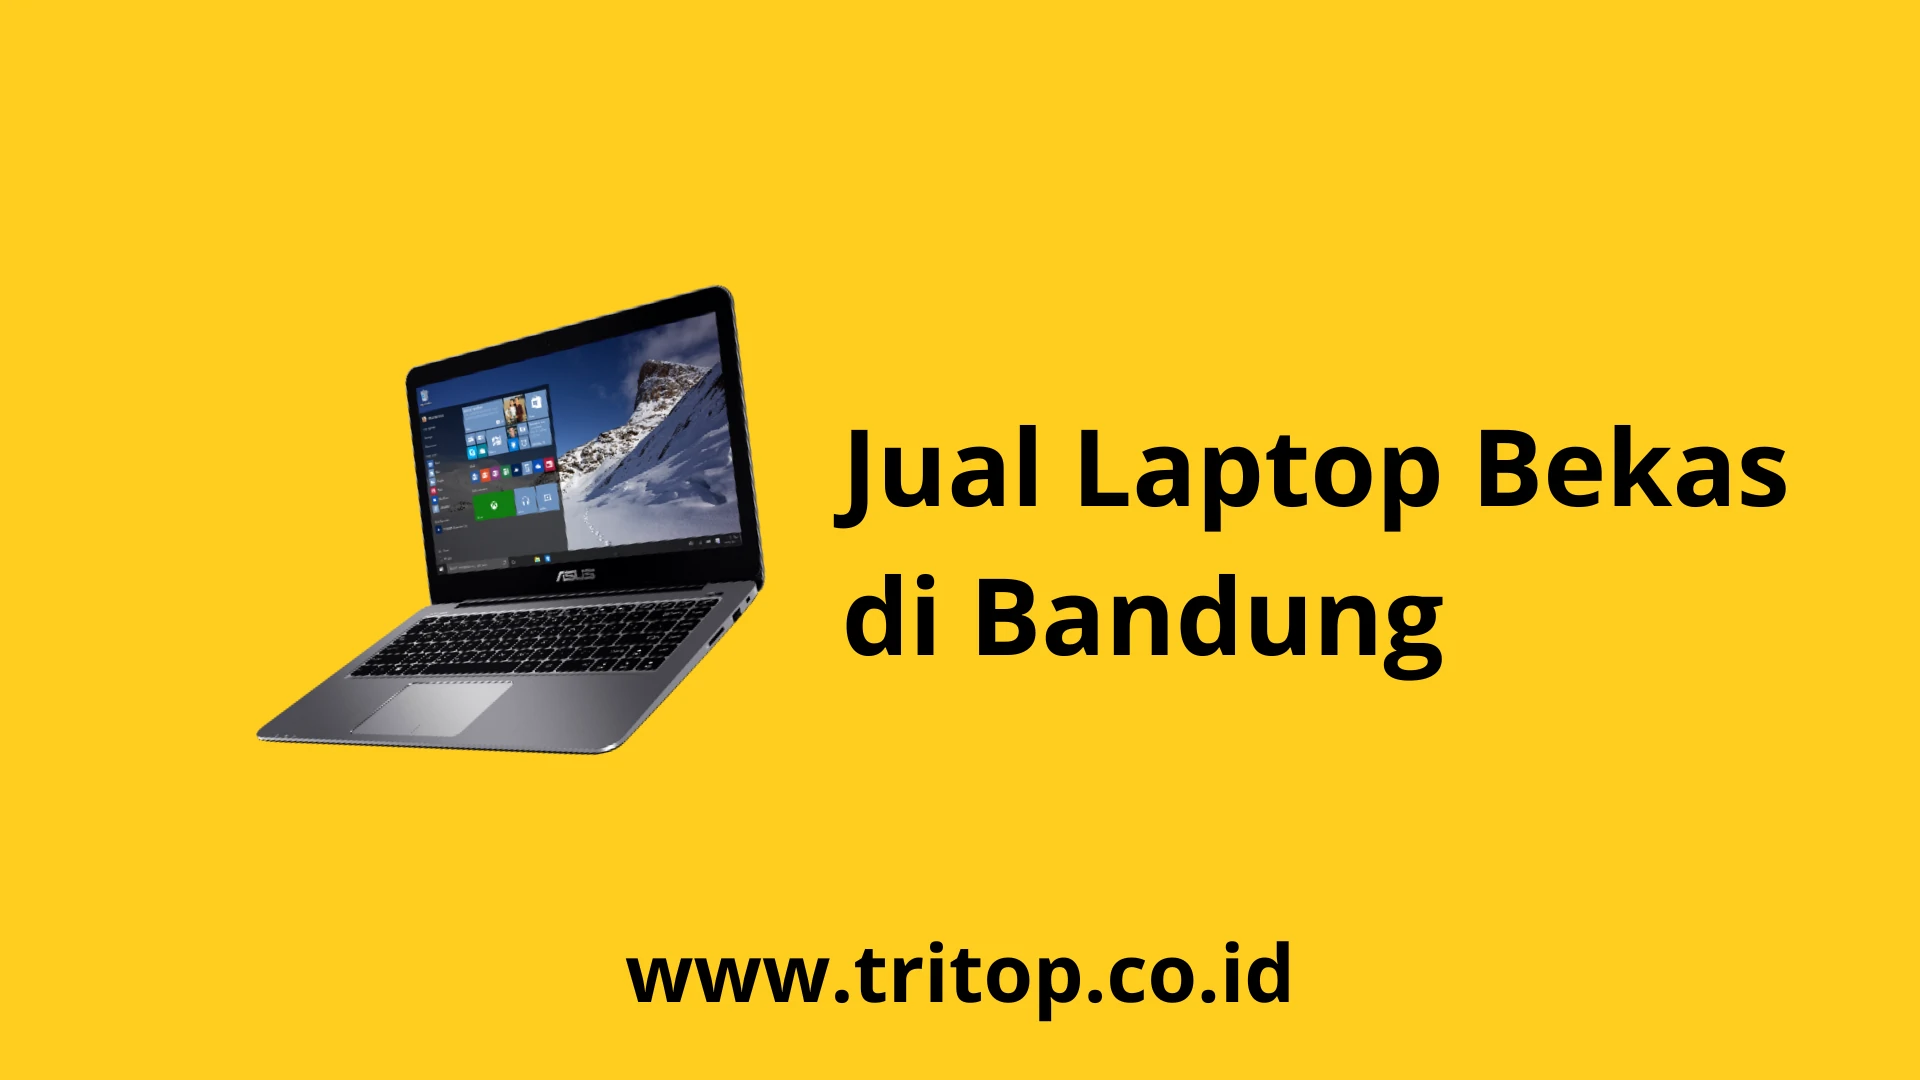 Jual Laptop Bekas Bandung Tritop.co.id